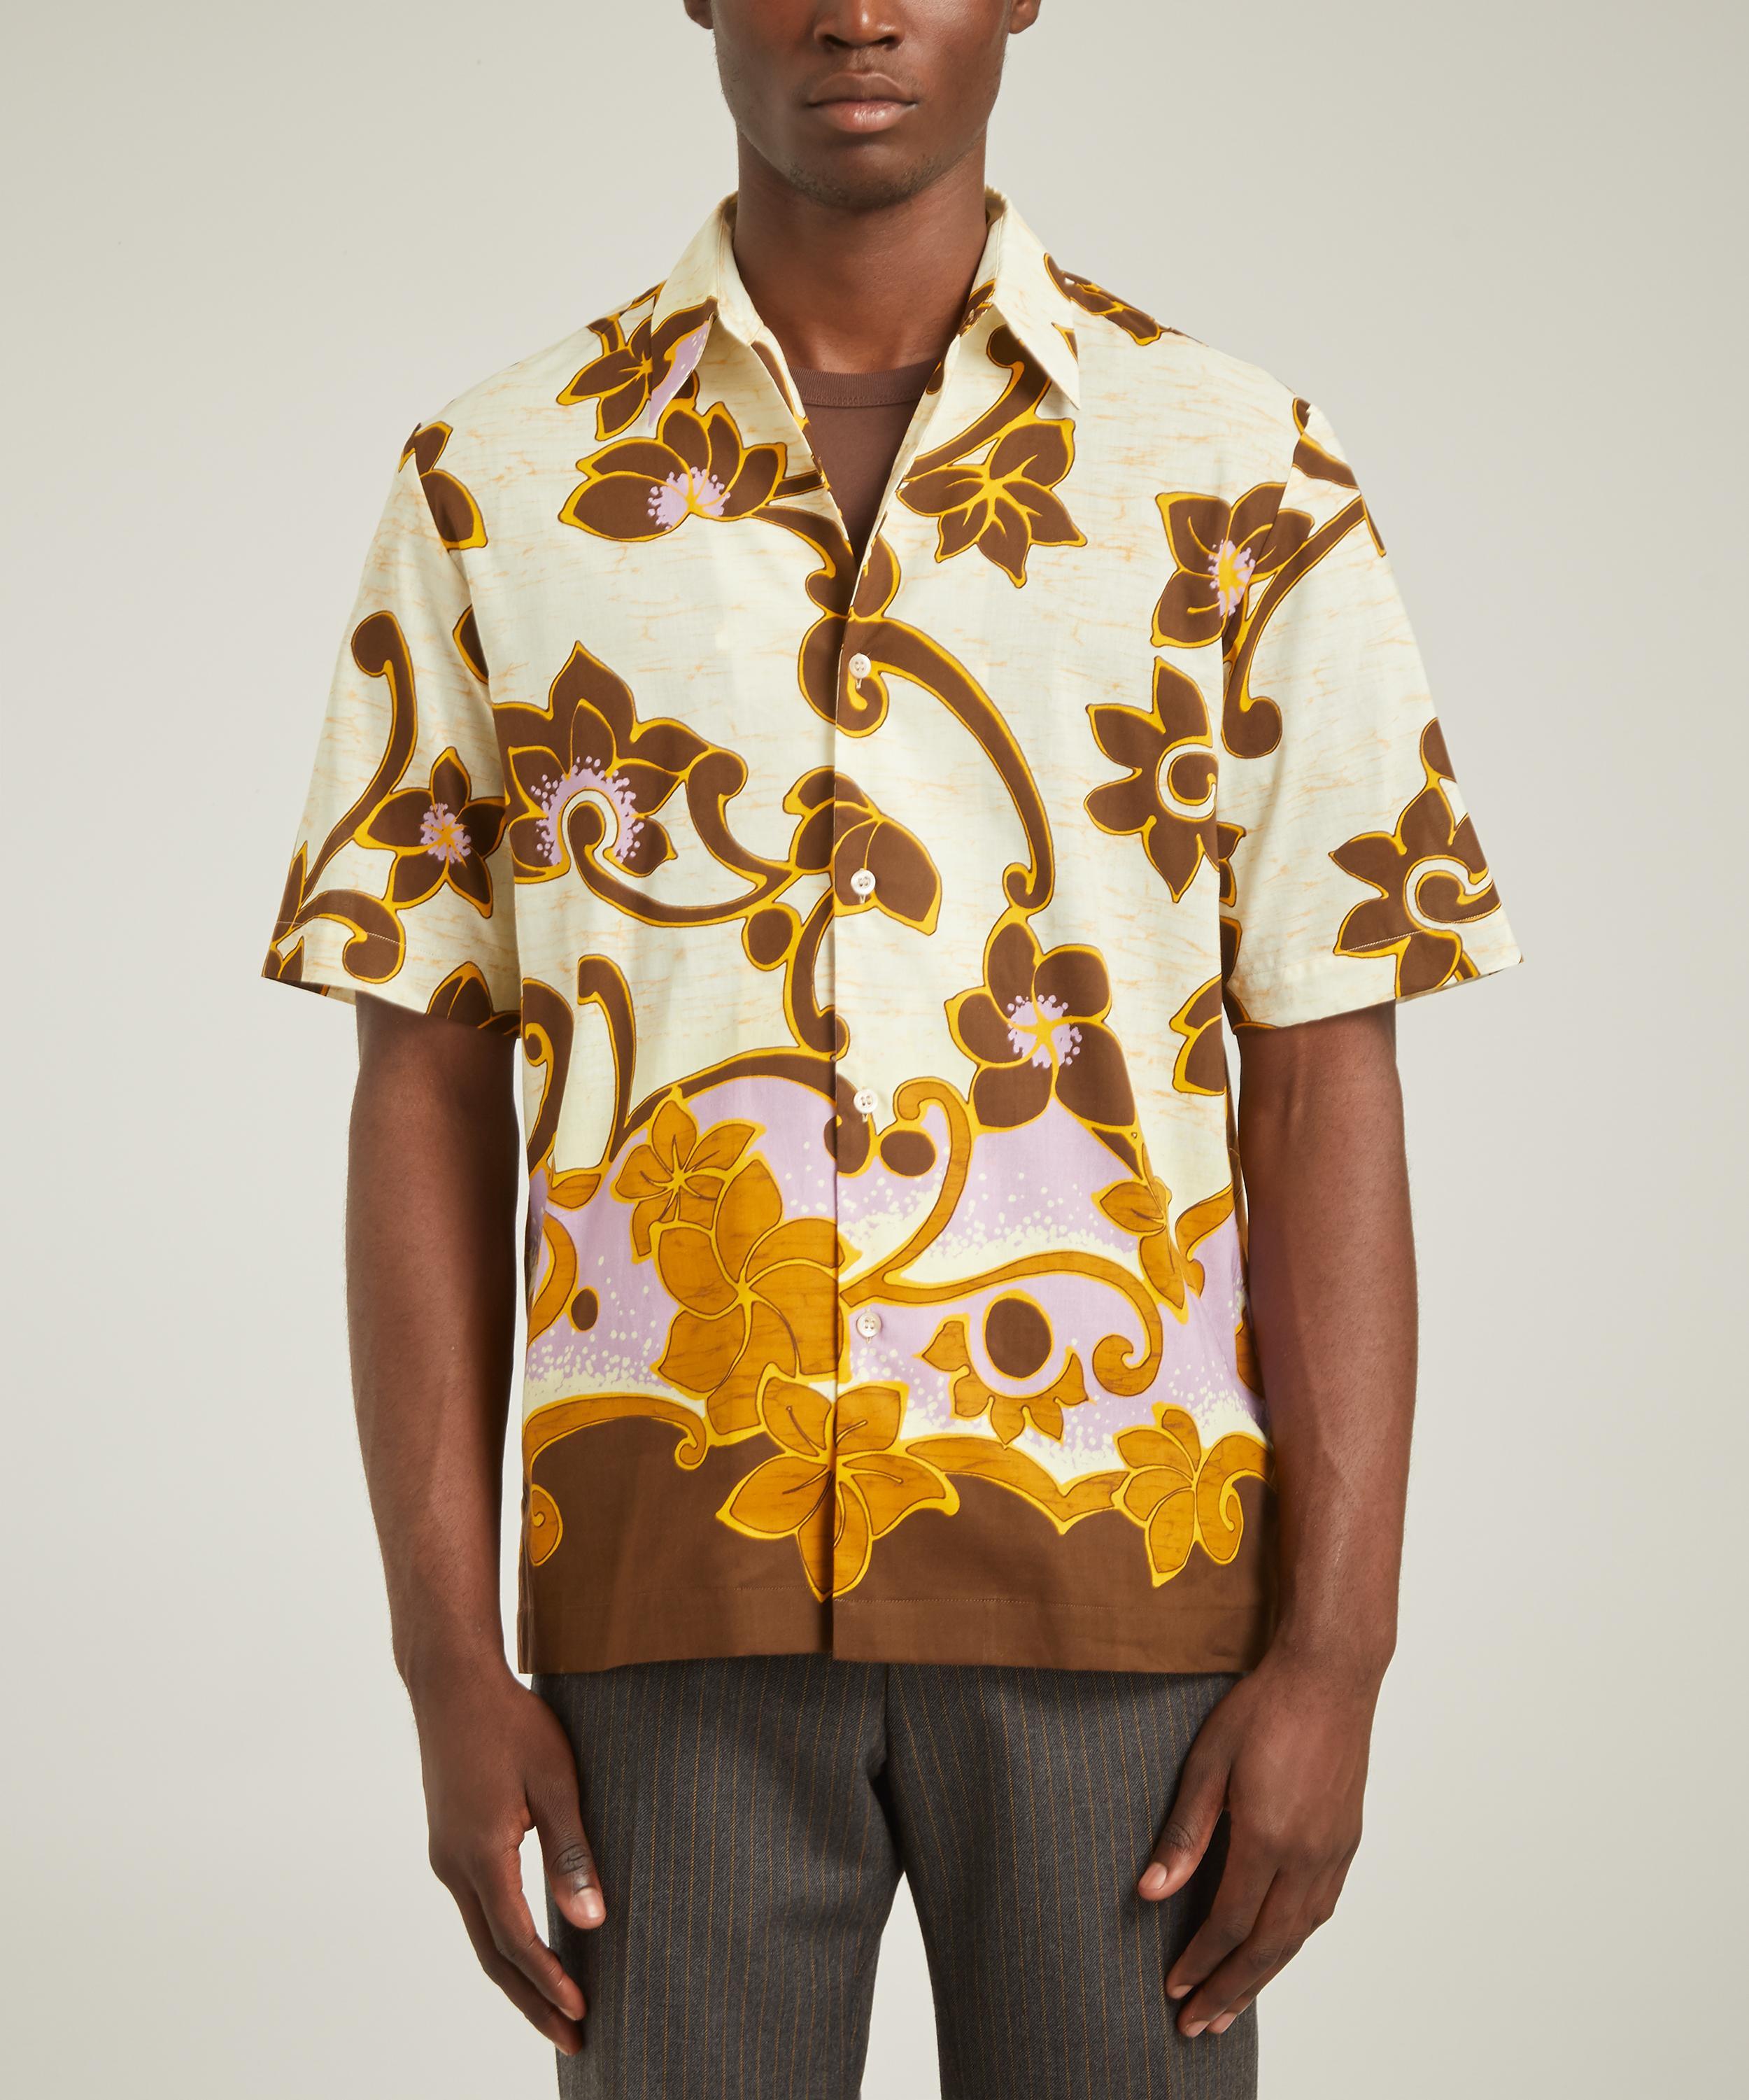 Dries Van Noten Floral Print Cotton Shirt for Men - Lyst